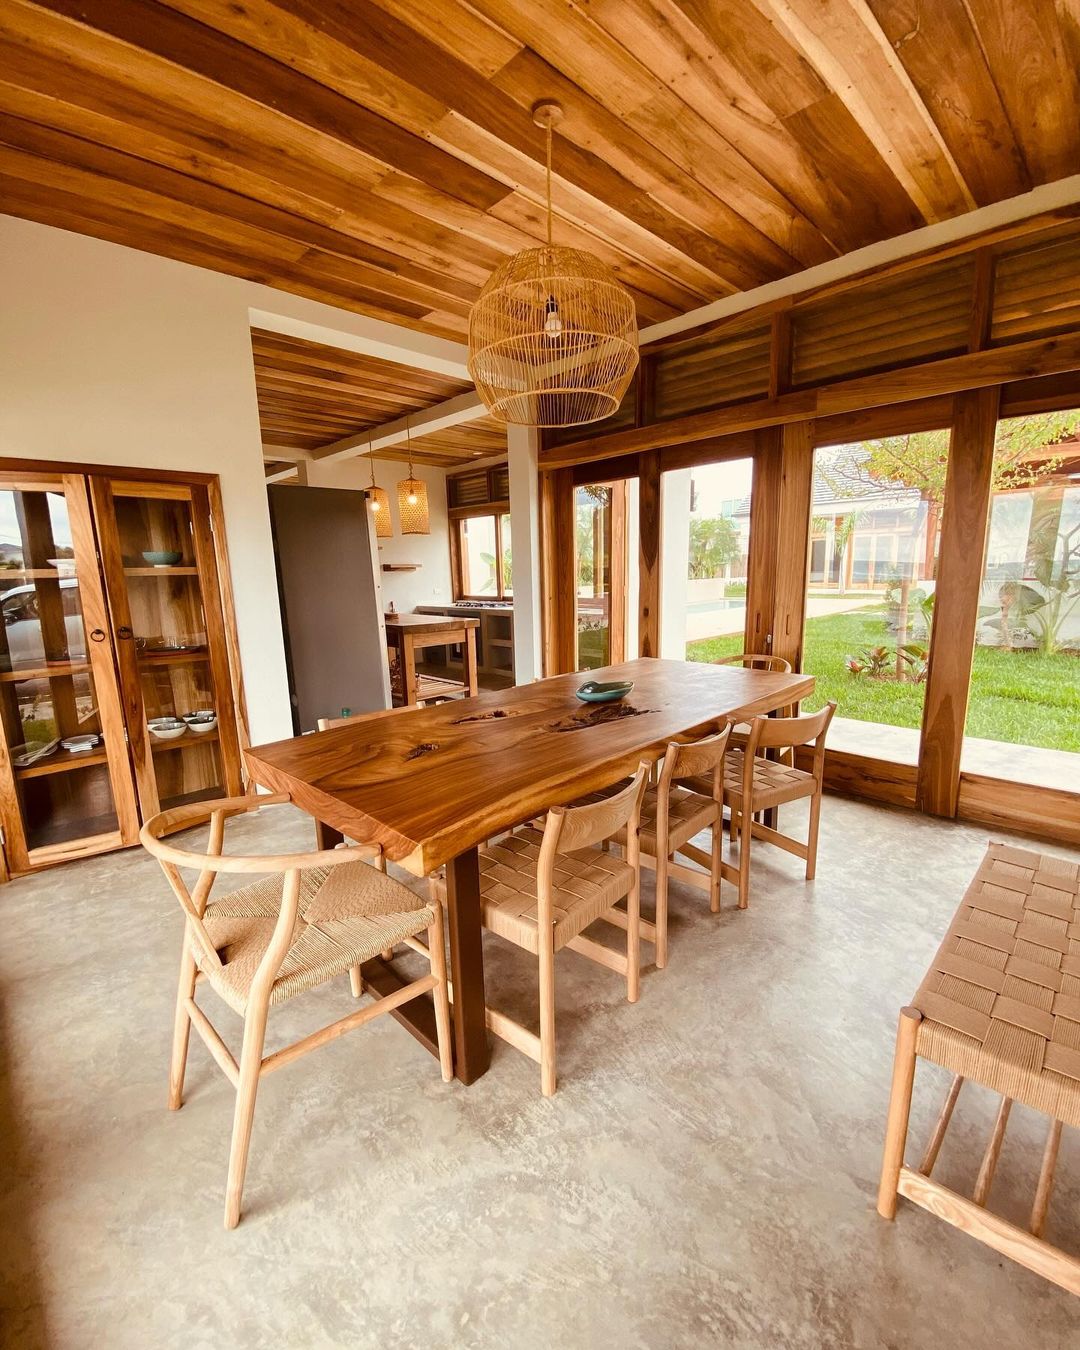 Warm Wood Beams and Open Design for Indoor-Outdoor Living